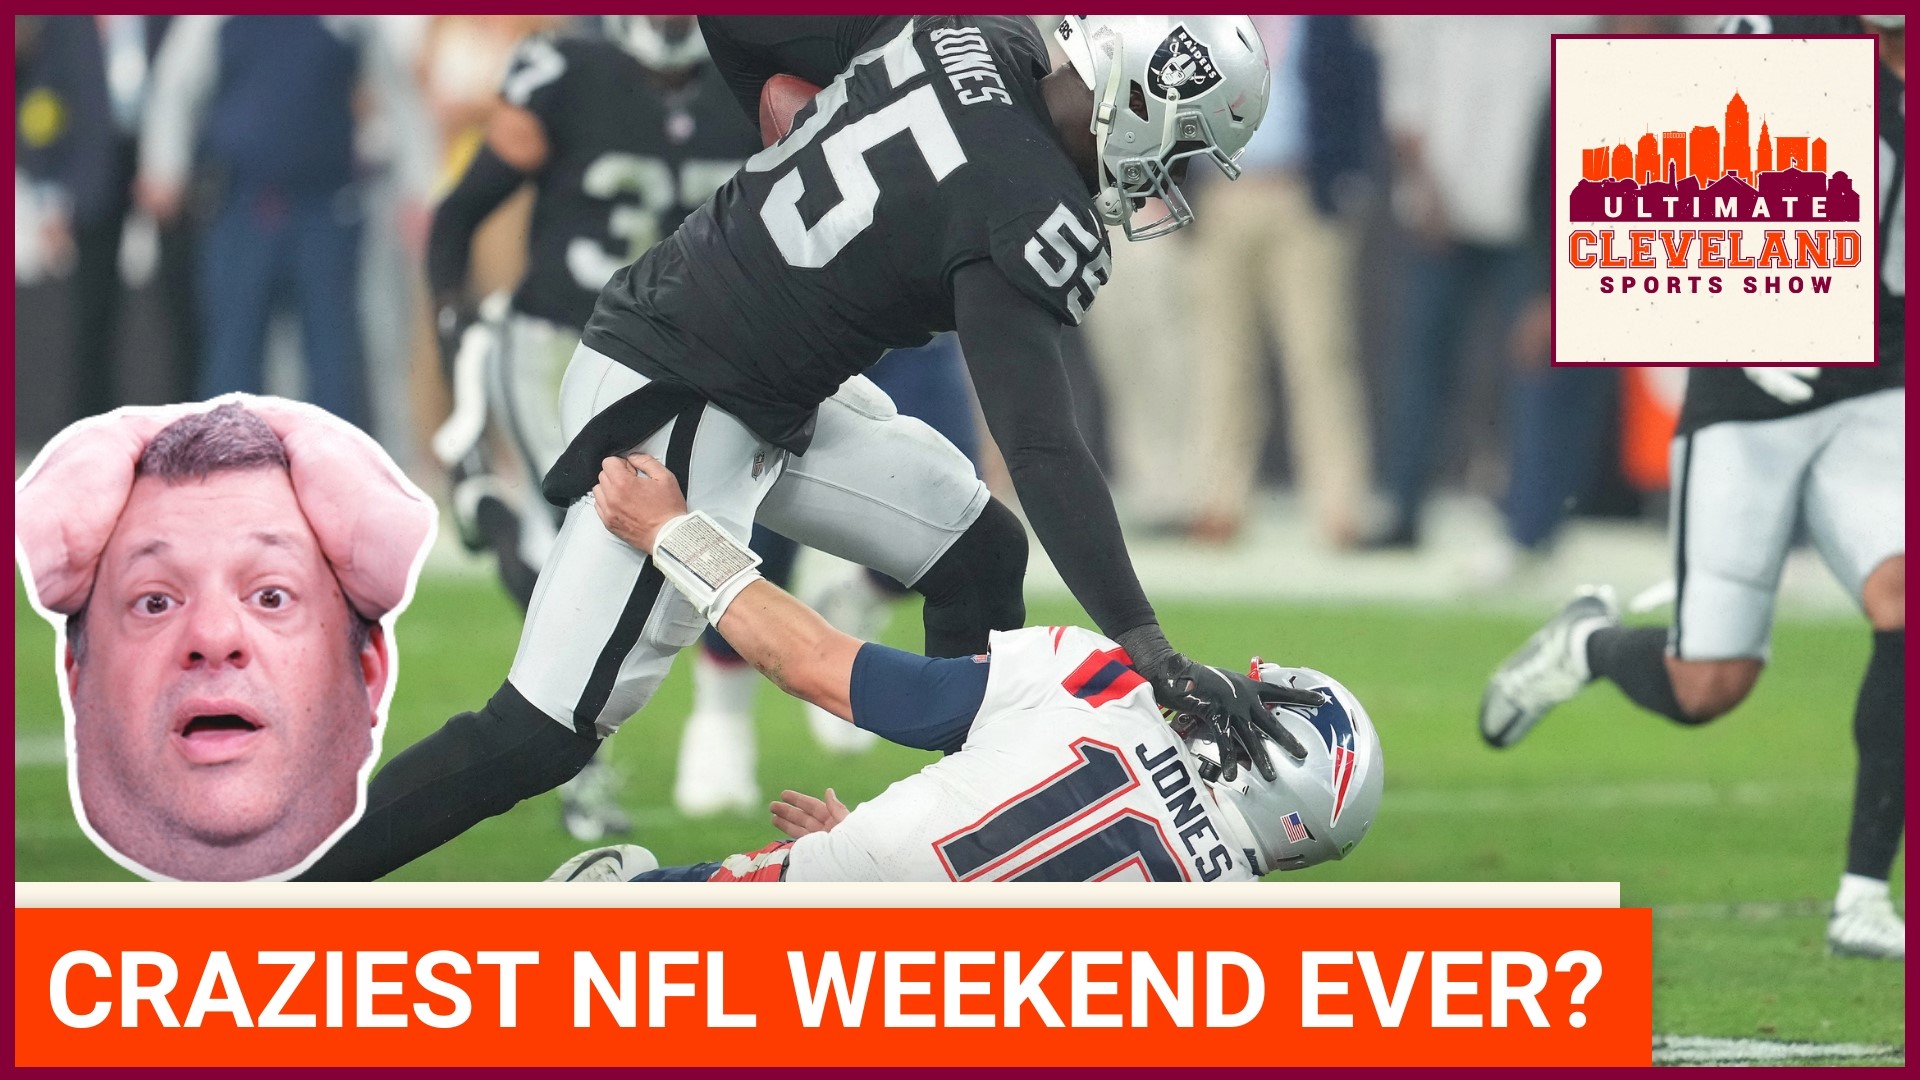 Raiders' insane last-second win over Patriots still talk of NFL